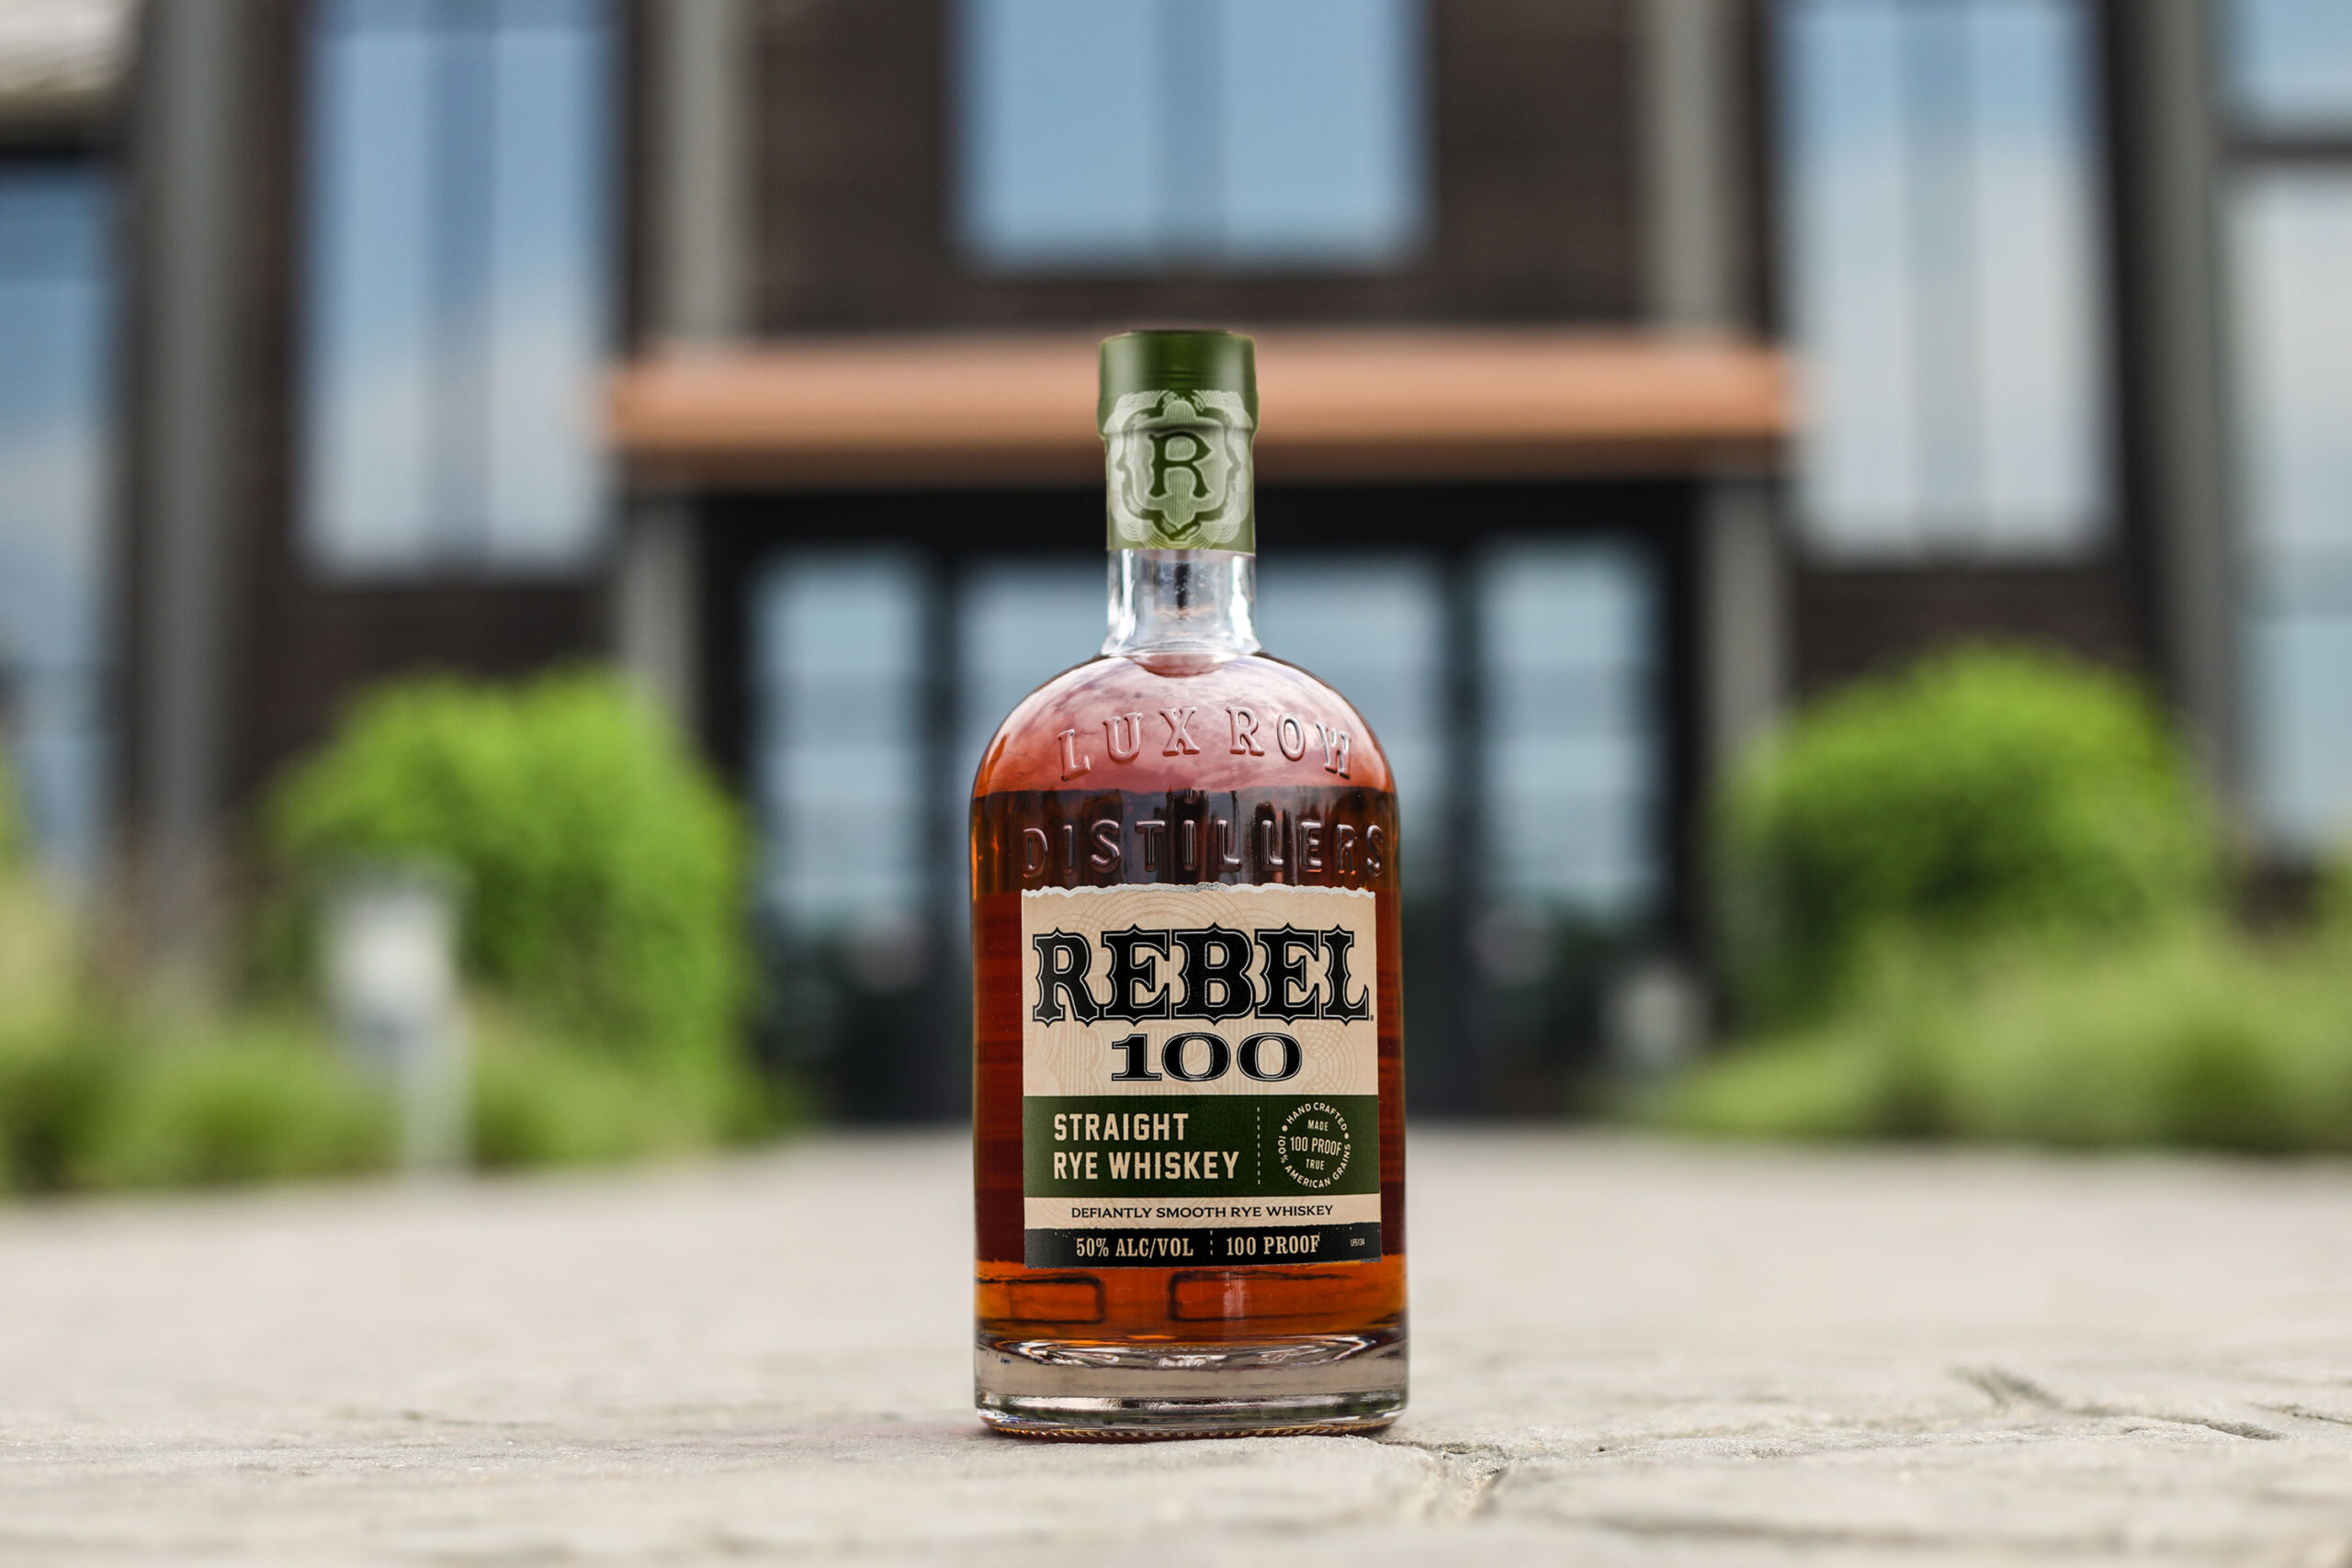 A bottle of Rebel 100 Rye in front of Lux Row Distillers